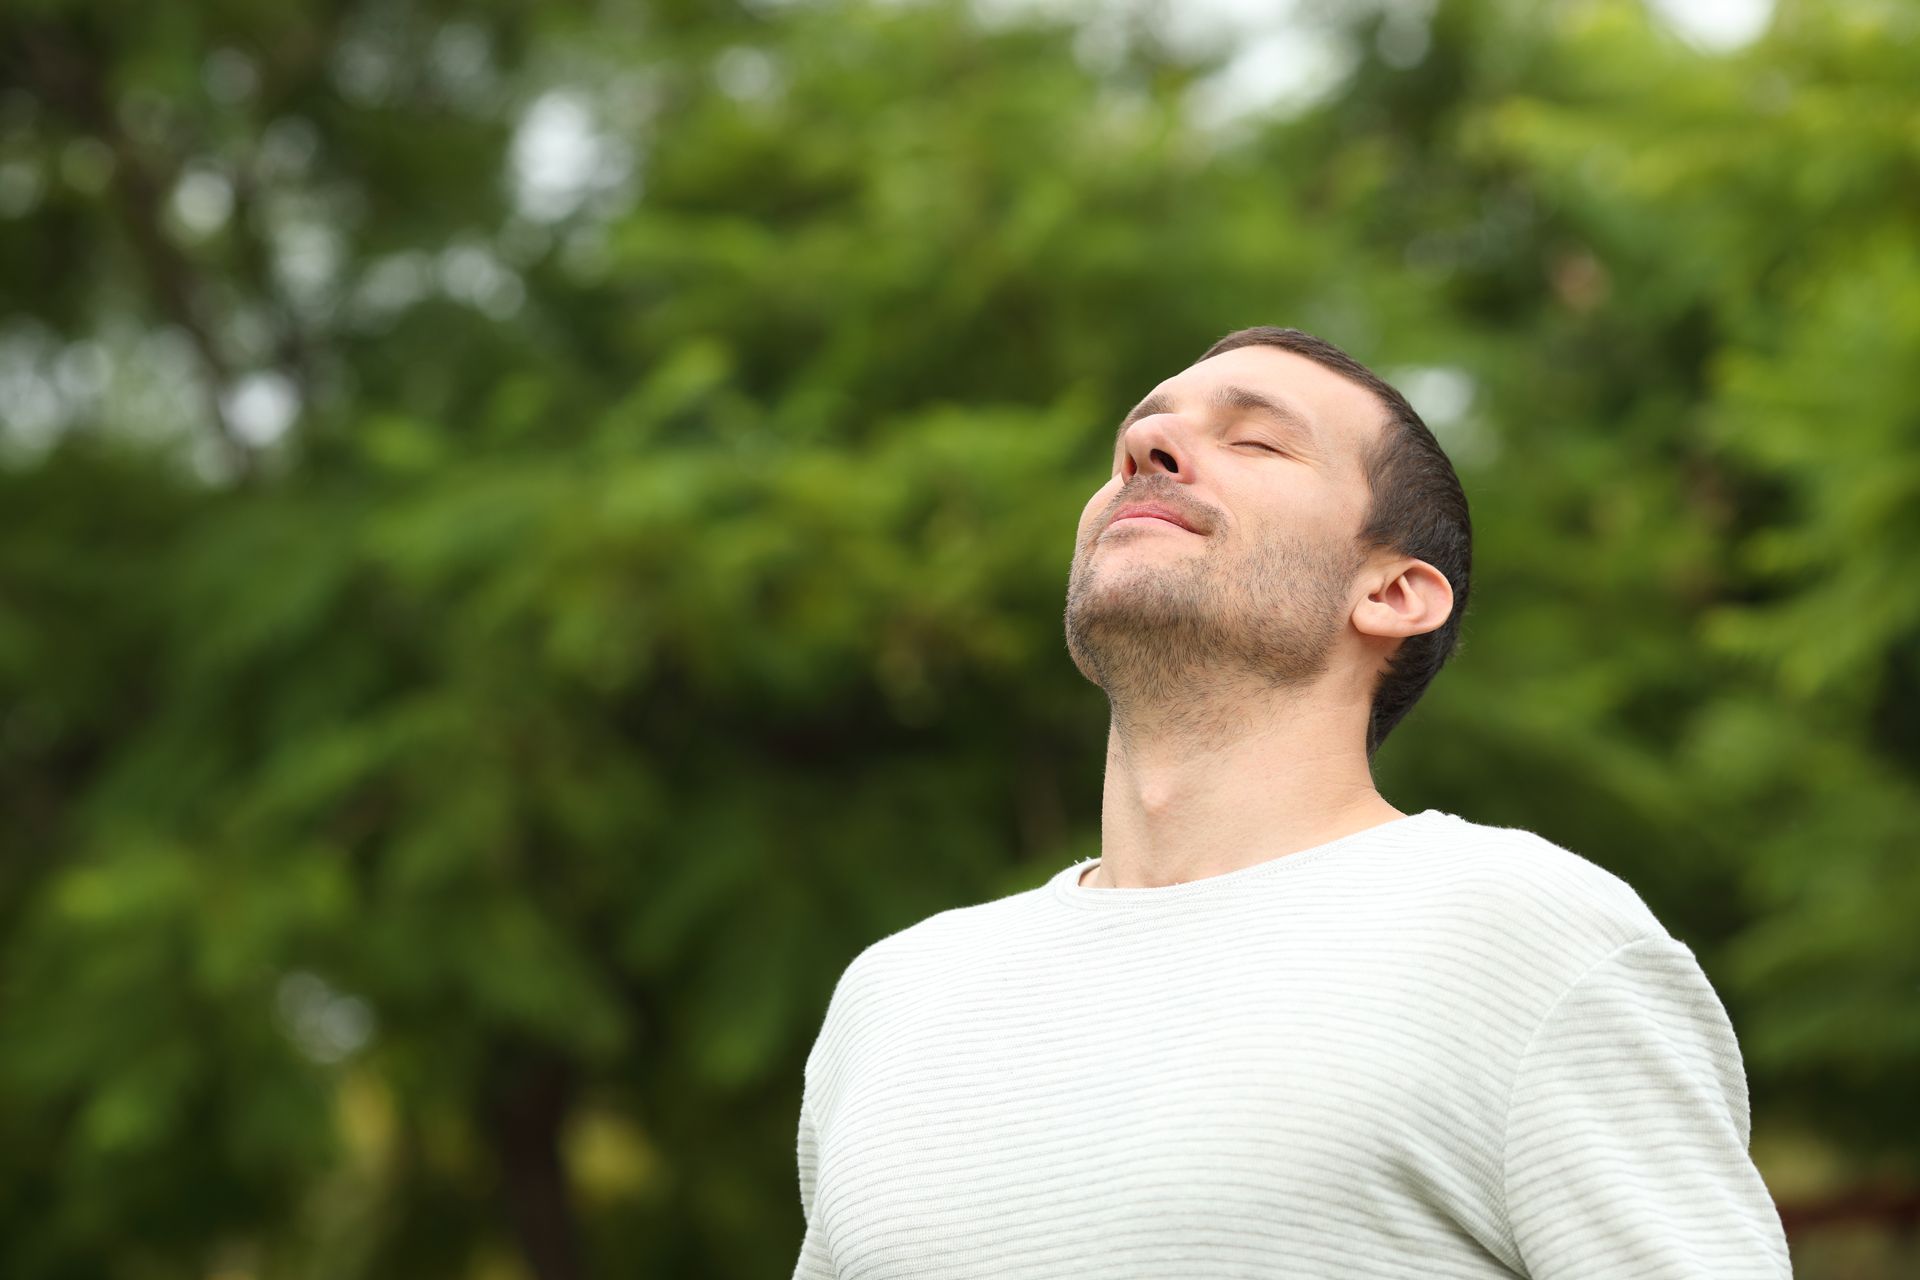 A man is breathing fresh air in a park